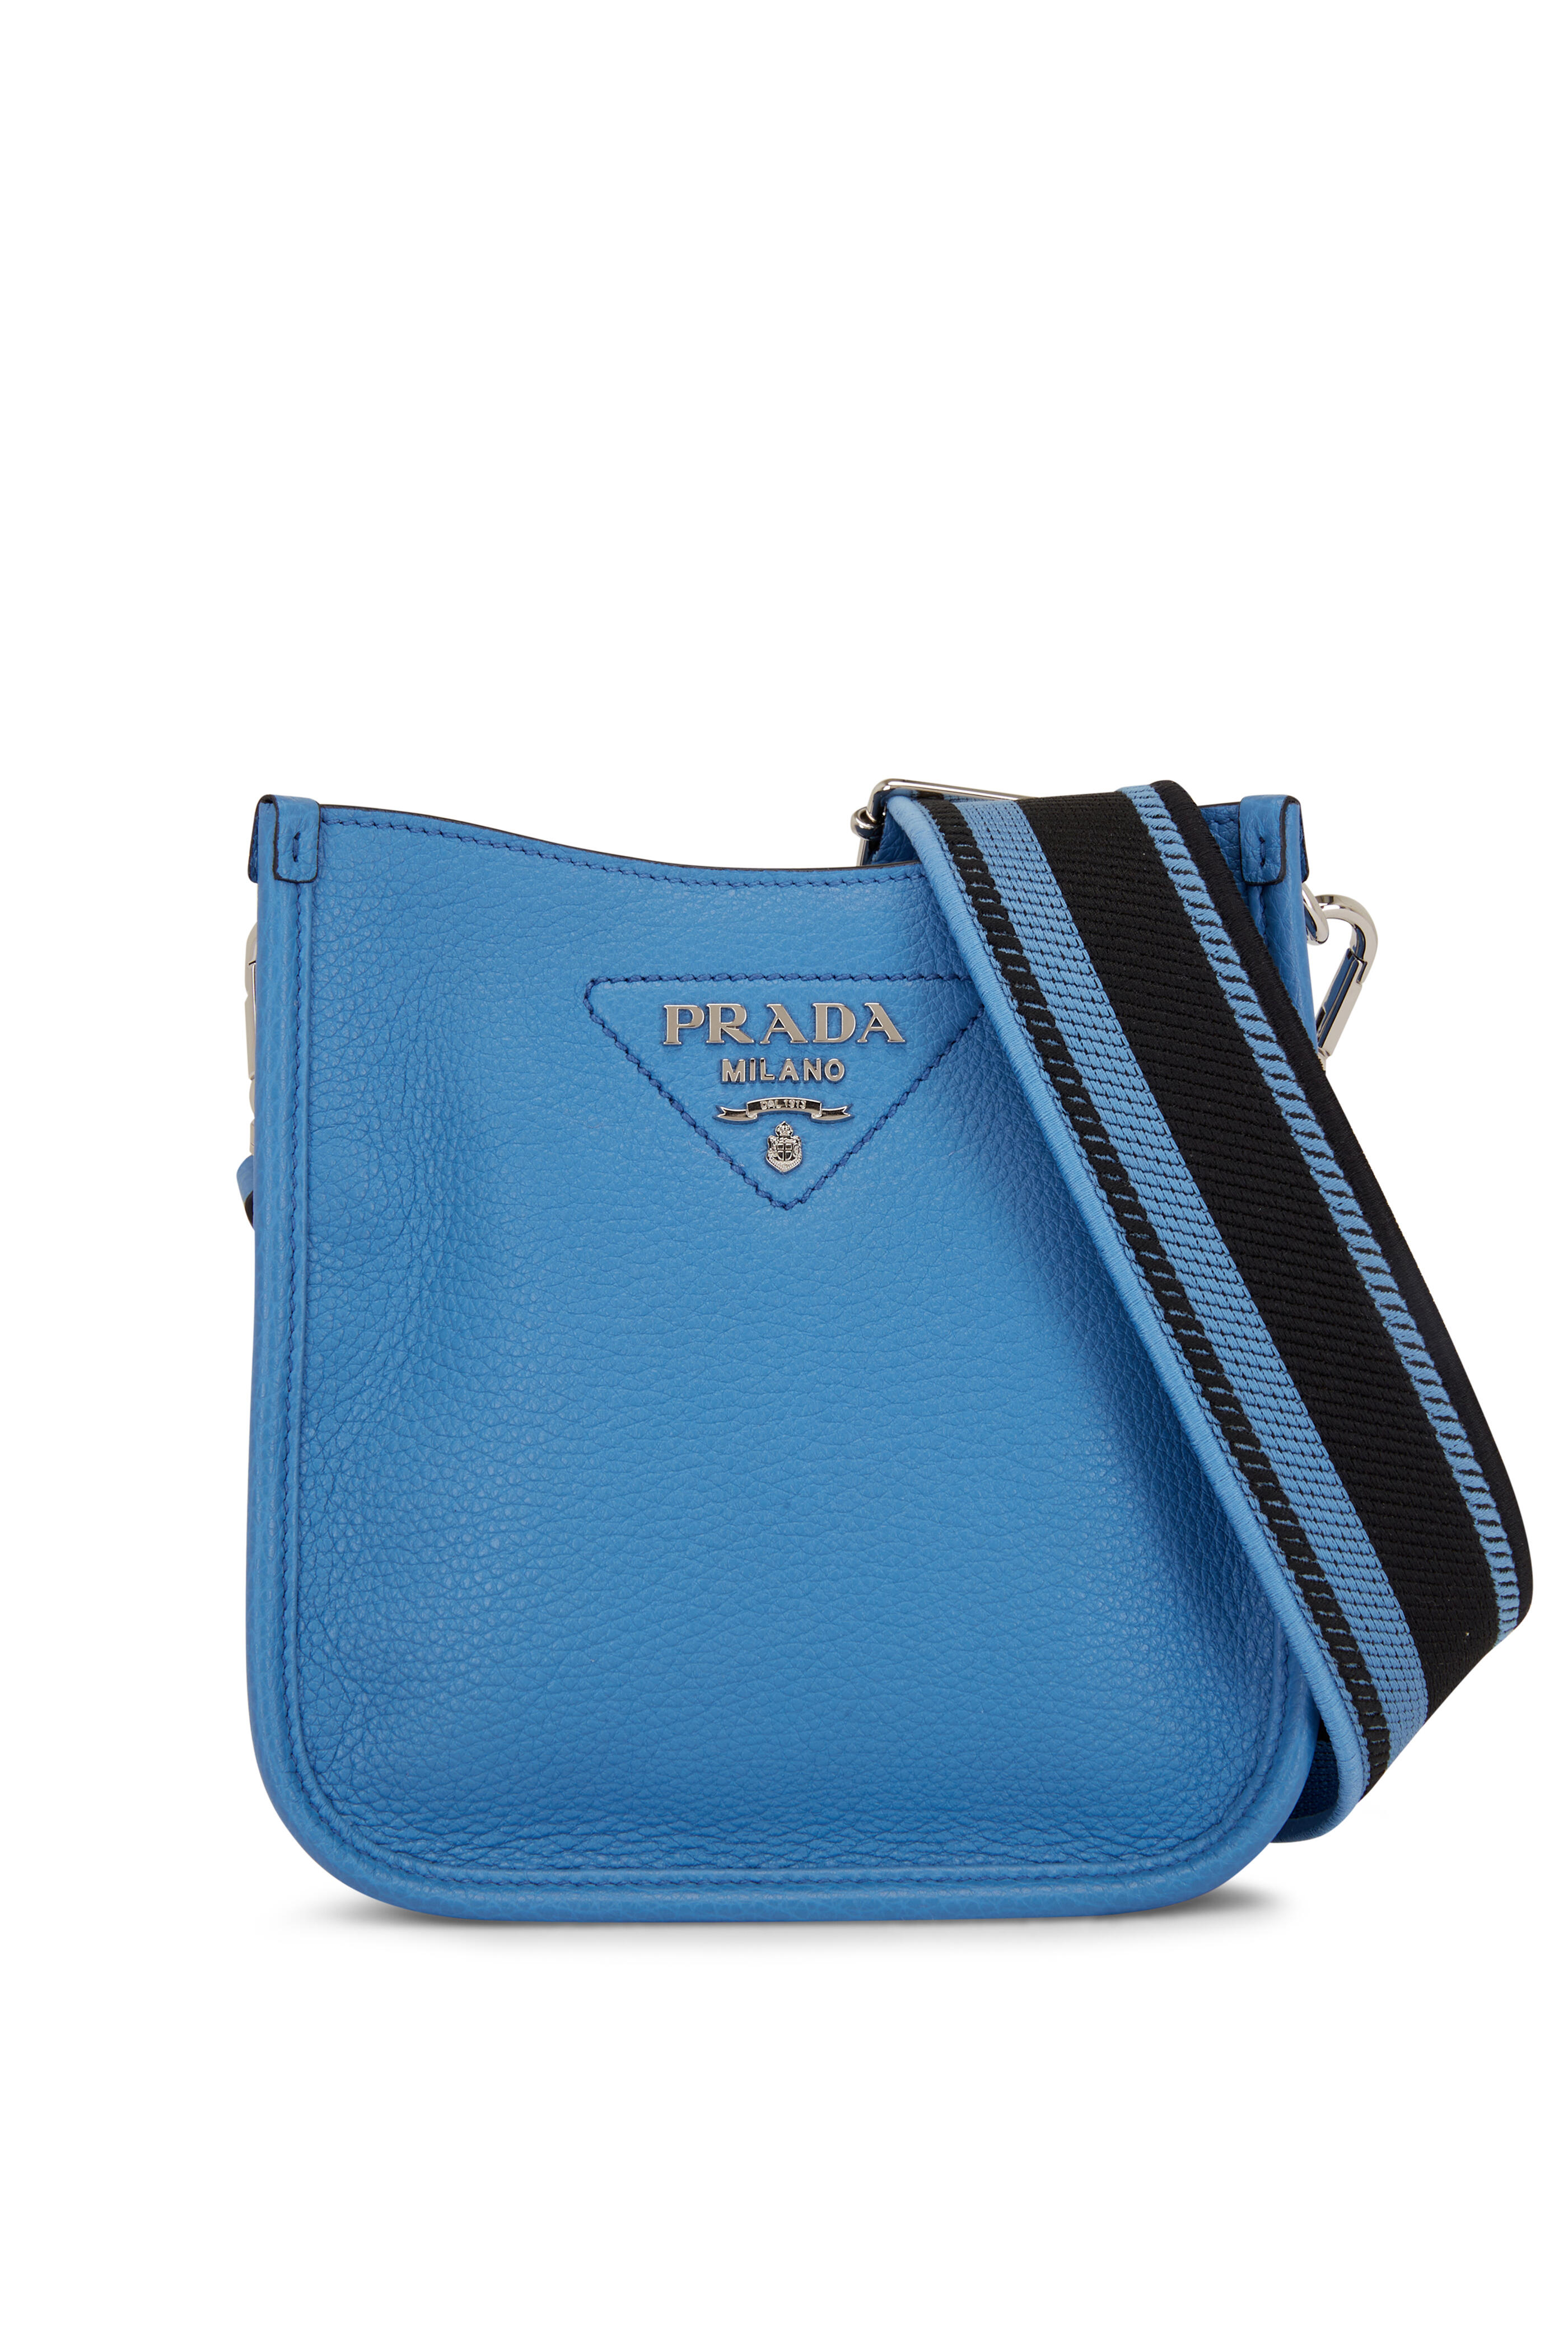 Prada - Flou Blue Leather Mini Shoulder Bag | Mitchell Stores